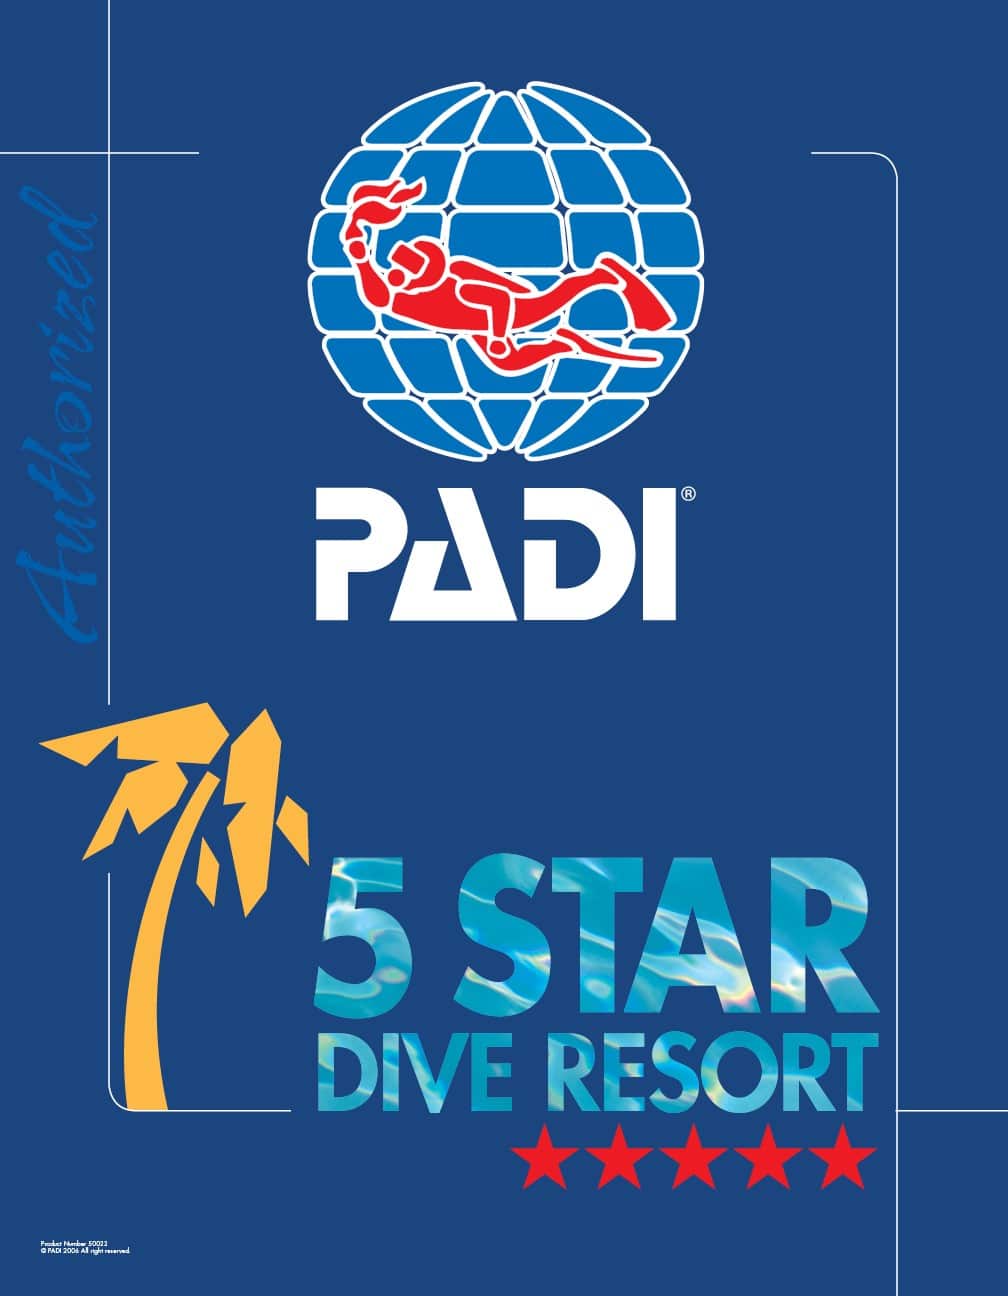 PADI 5-star Dive Resort - Coral Divers, Sodwana bay, South Africa